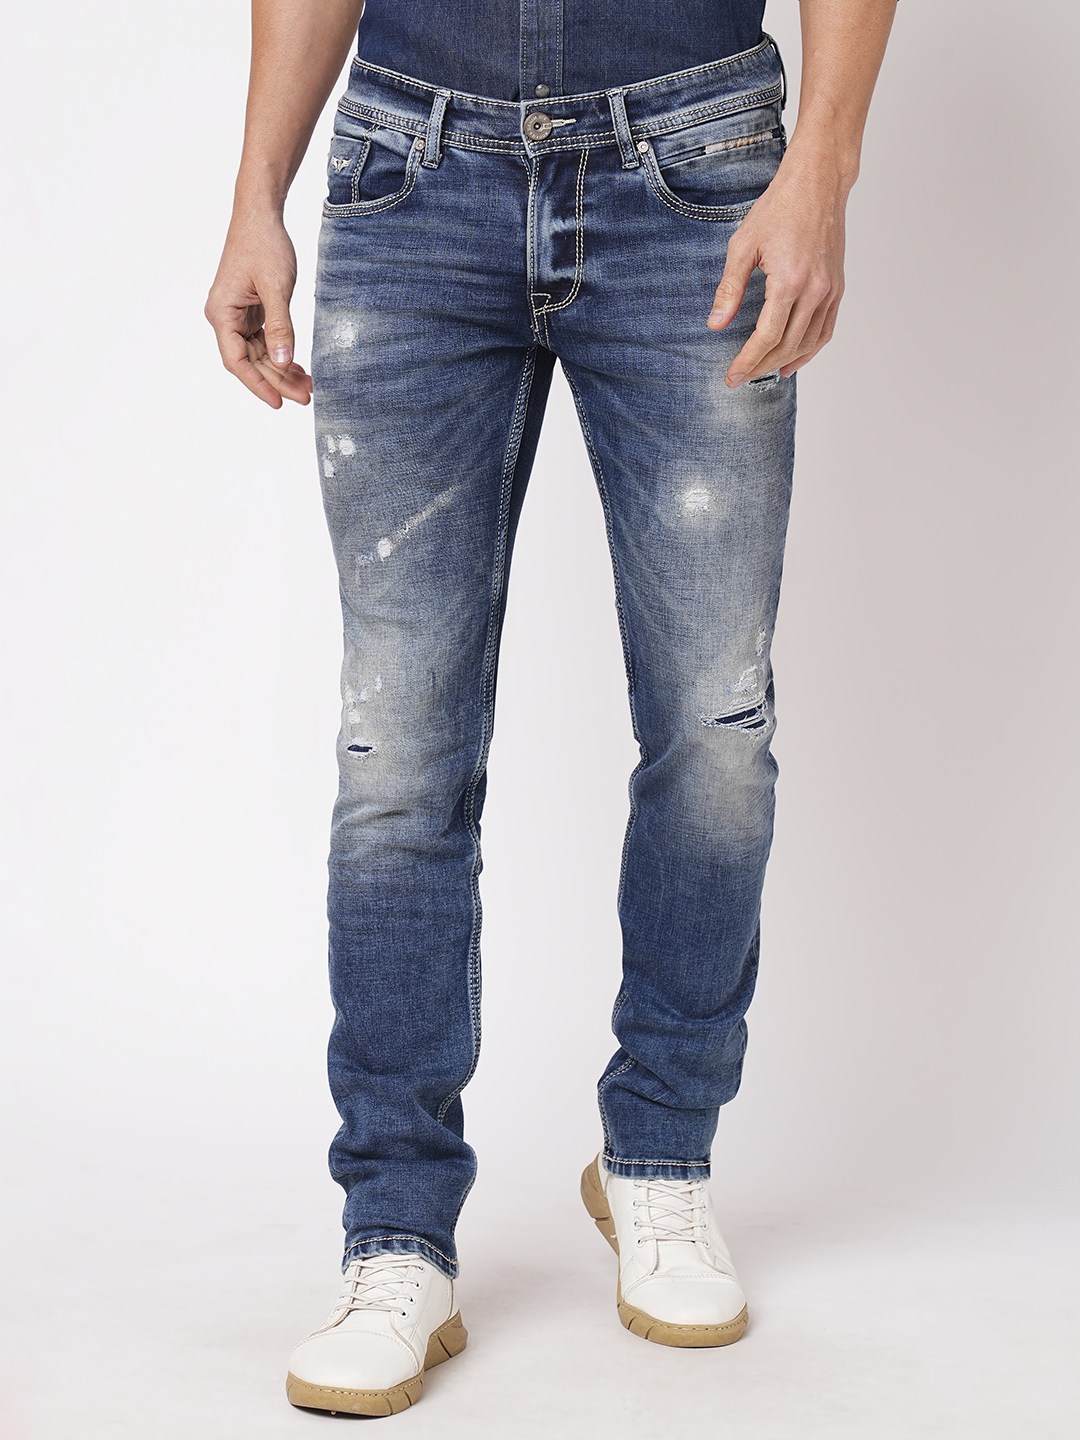 Luxury Jeans and Denim for Men - Loschi Boutique